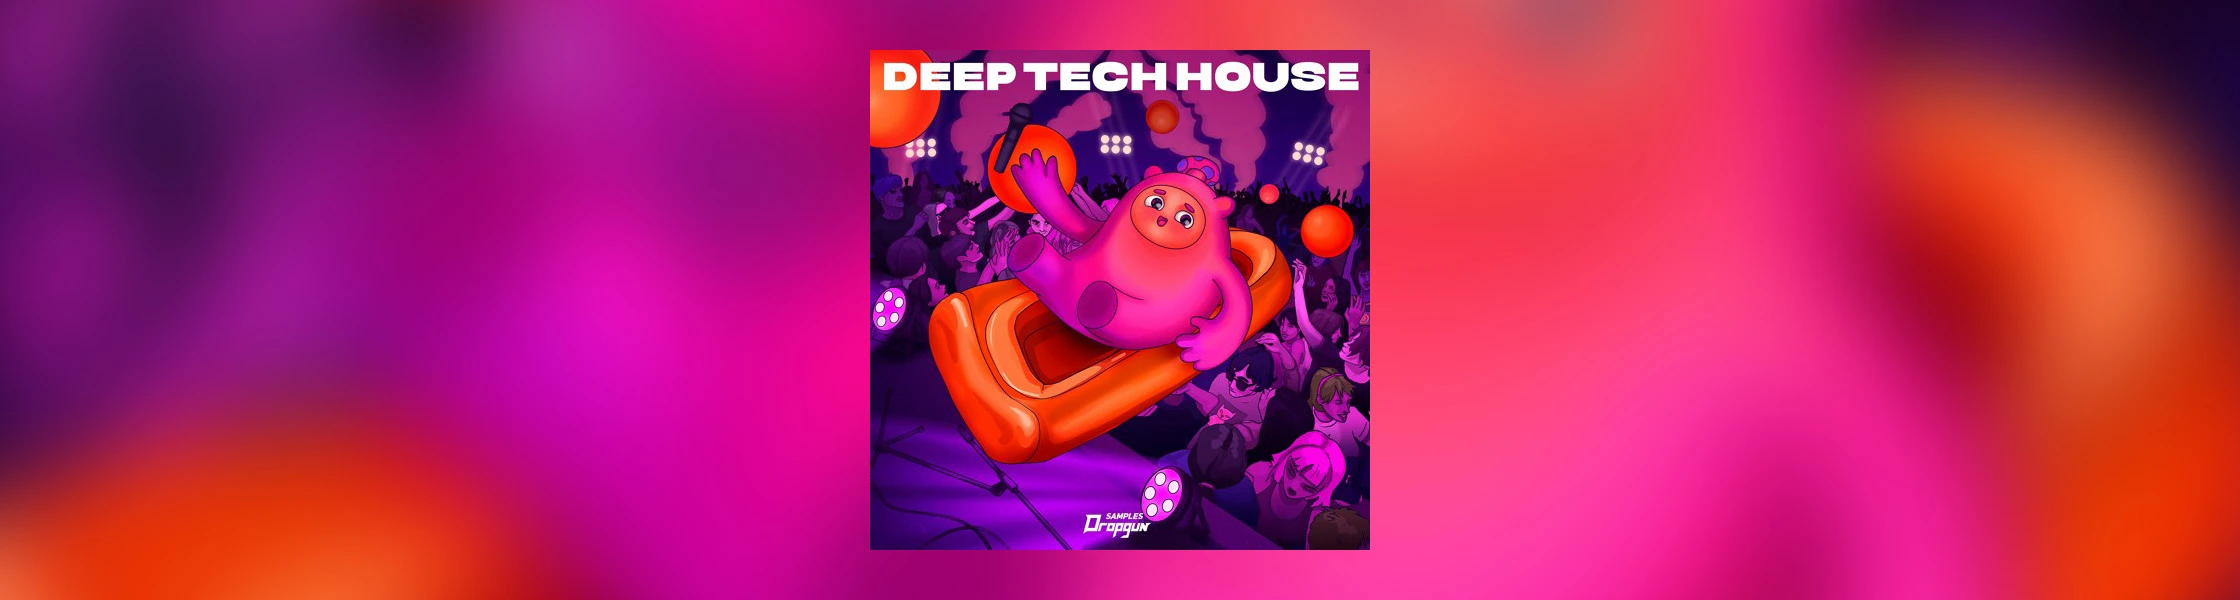 Dropgun Samples Deep Tech House